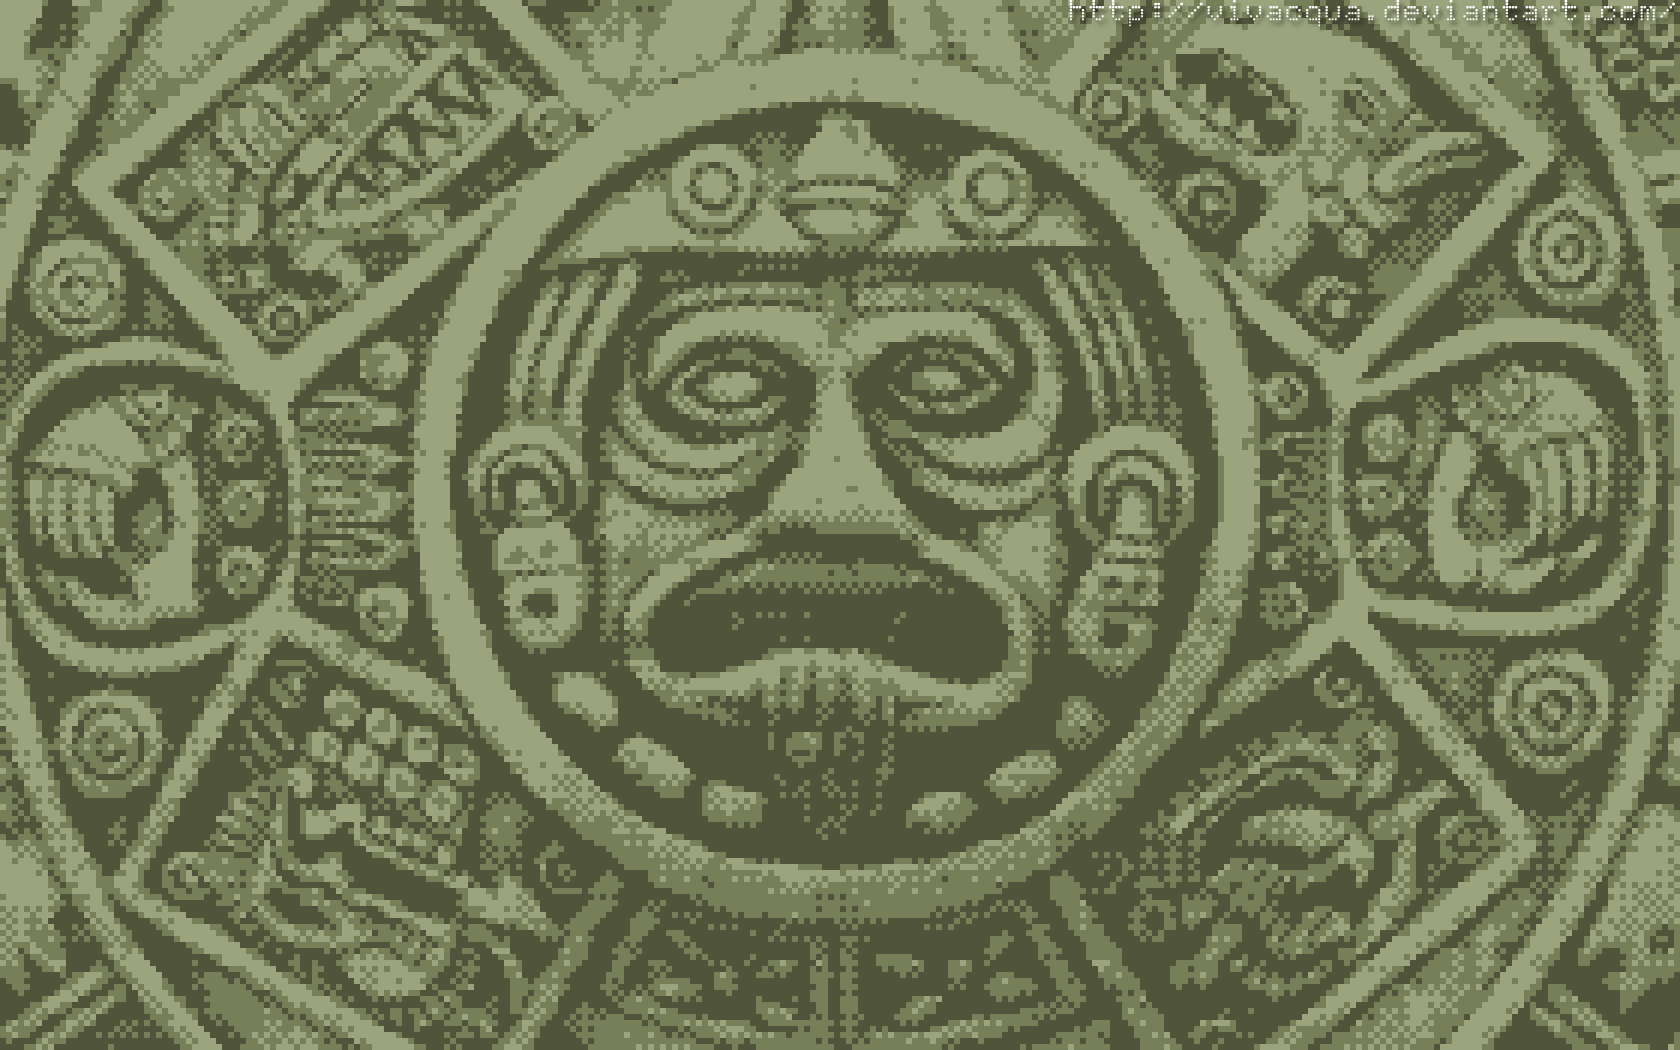 Aztec Calendar Gameboy Style by Vivacqua